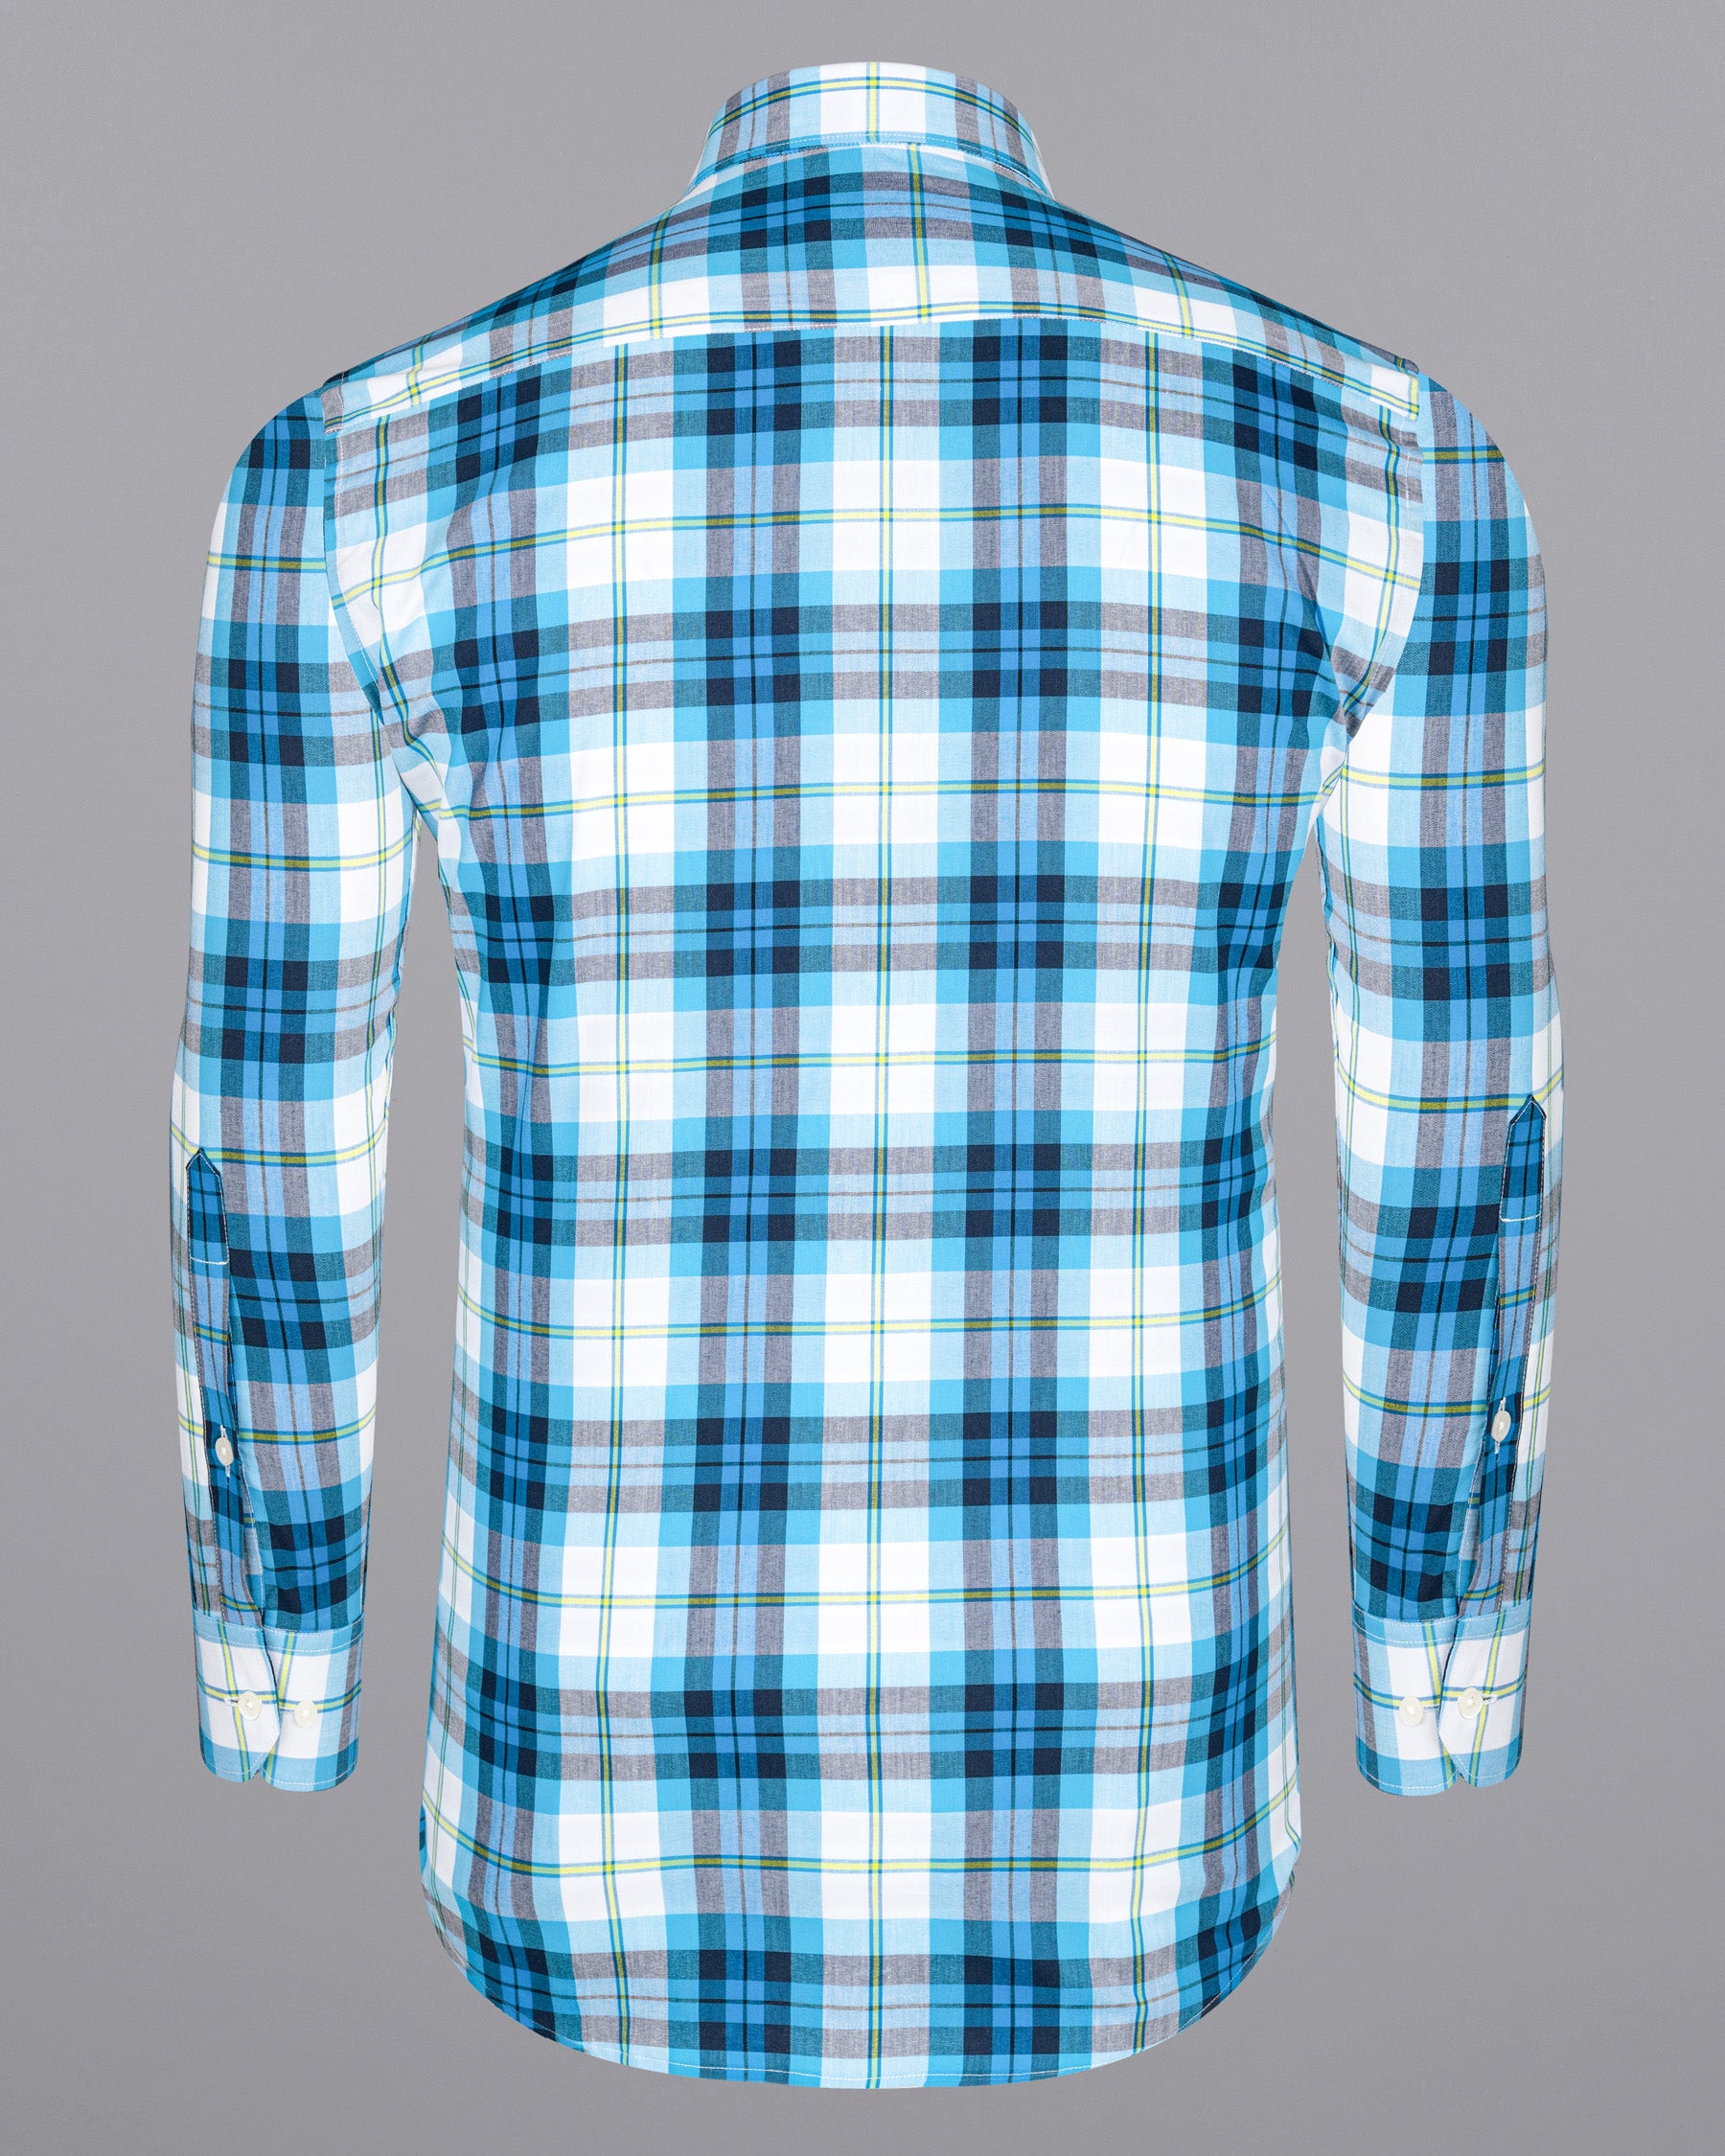 Anakiwa Blue and White Plaid Premium Twill Textured Premium Cotton Shirt 6707-38,6707-38,6707-39,6707-39,6707-40,6707-40,6707-42,6707-42,6707-44,6707-44,6707-46,6707-46,6707-48,6707-48,6707-50,6707-50,6707-52,6707-52